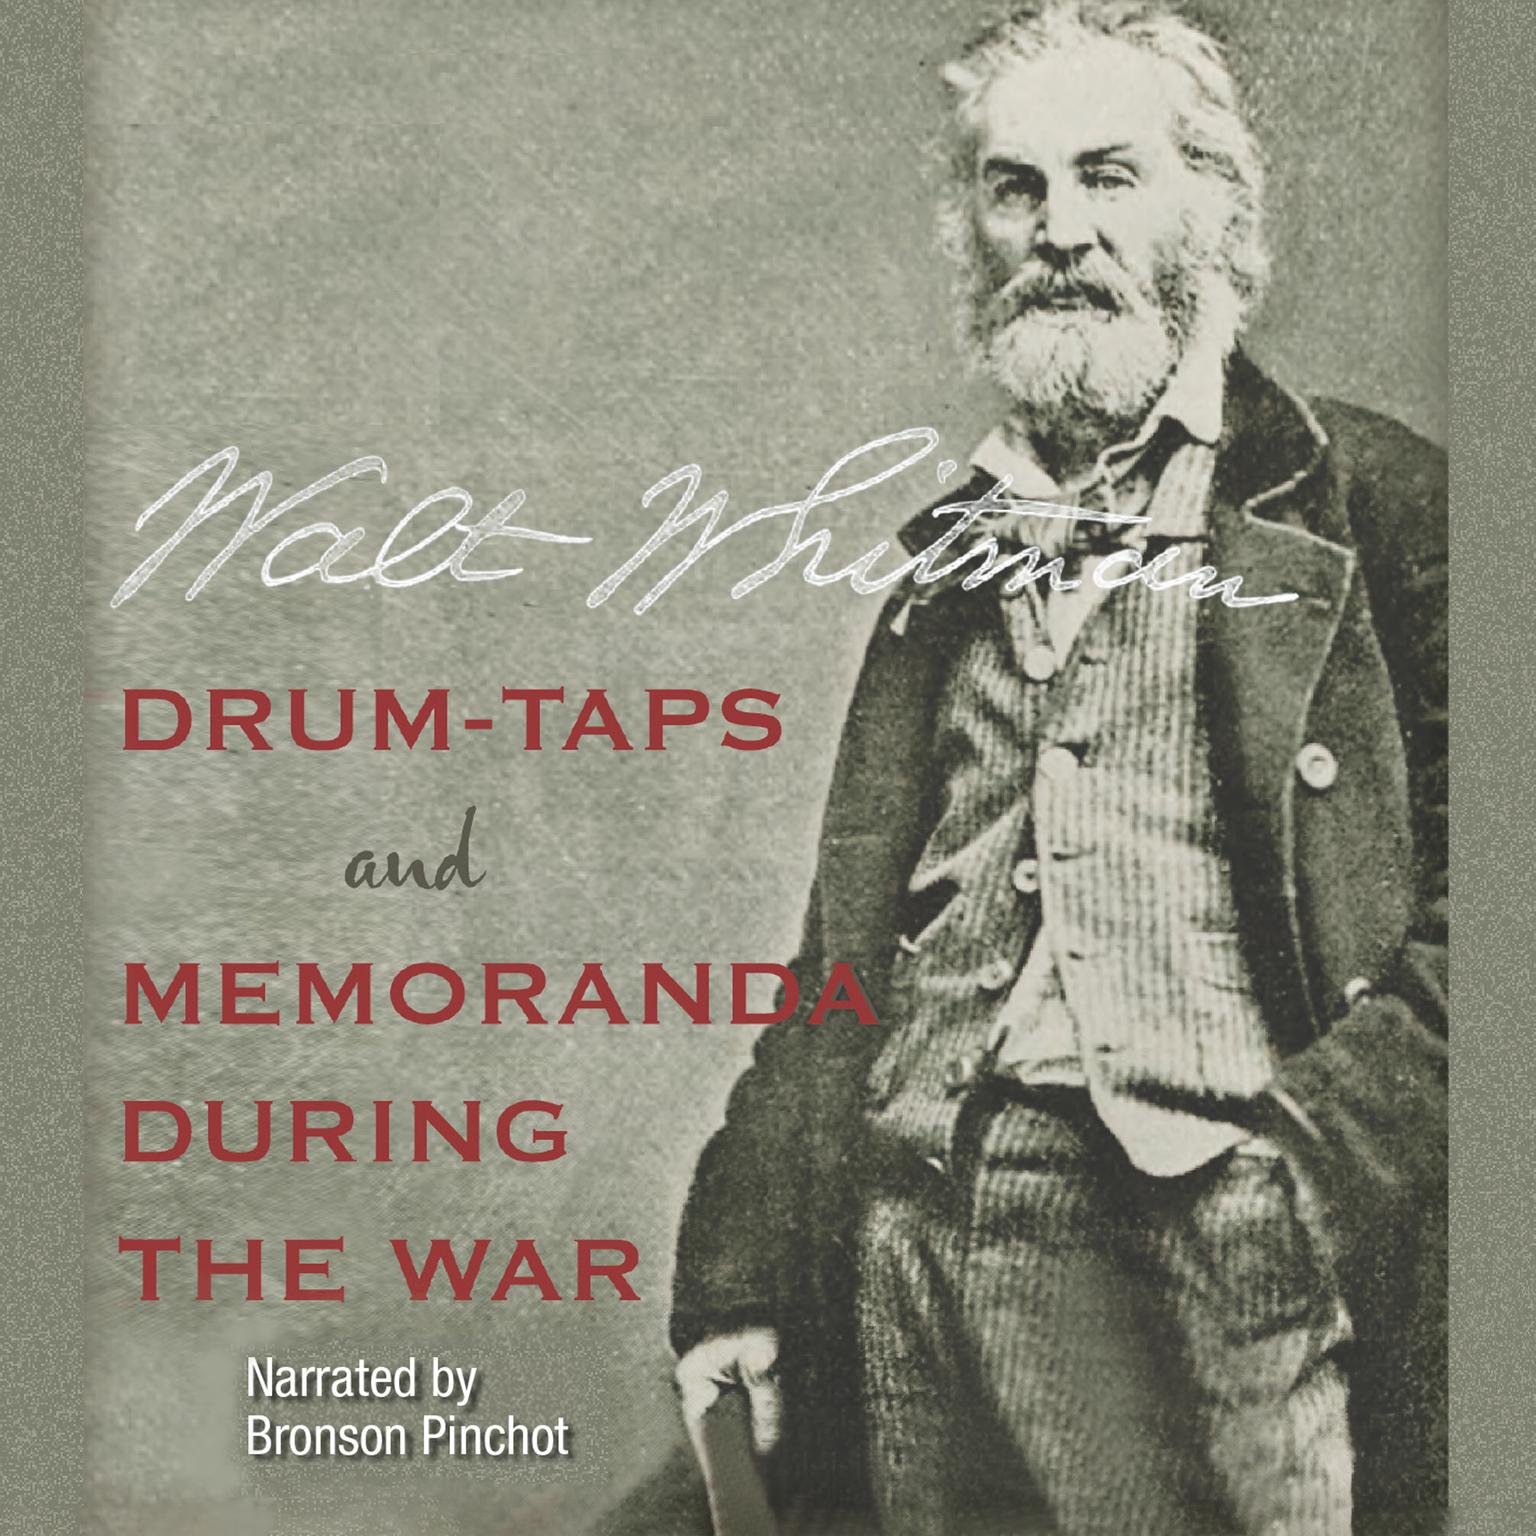 Drum-Taps and Memoranda During the War Audiobook, by Walt Whitman